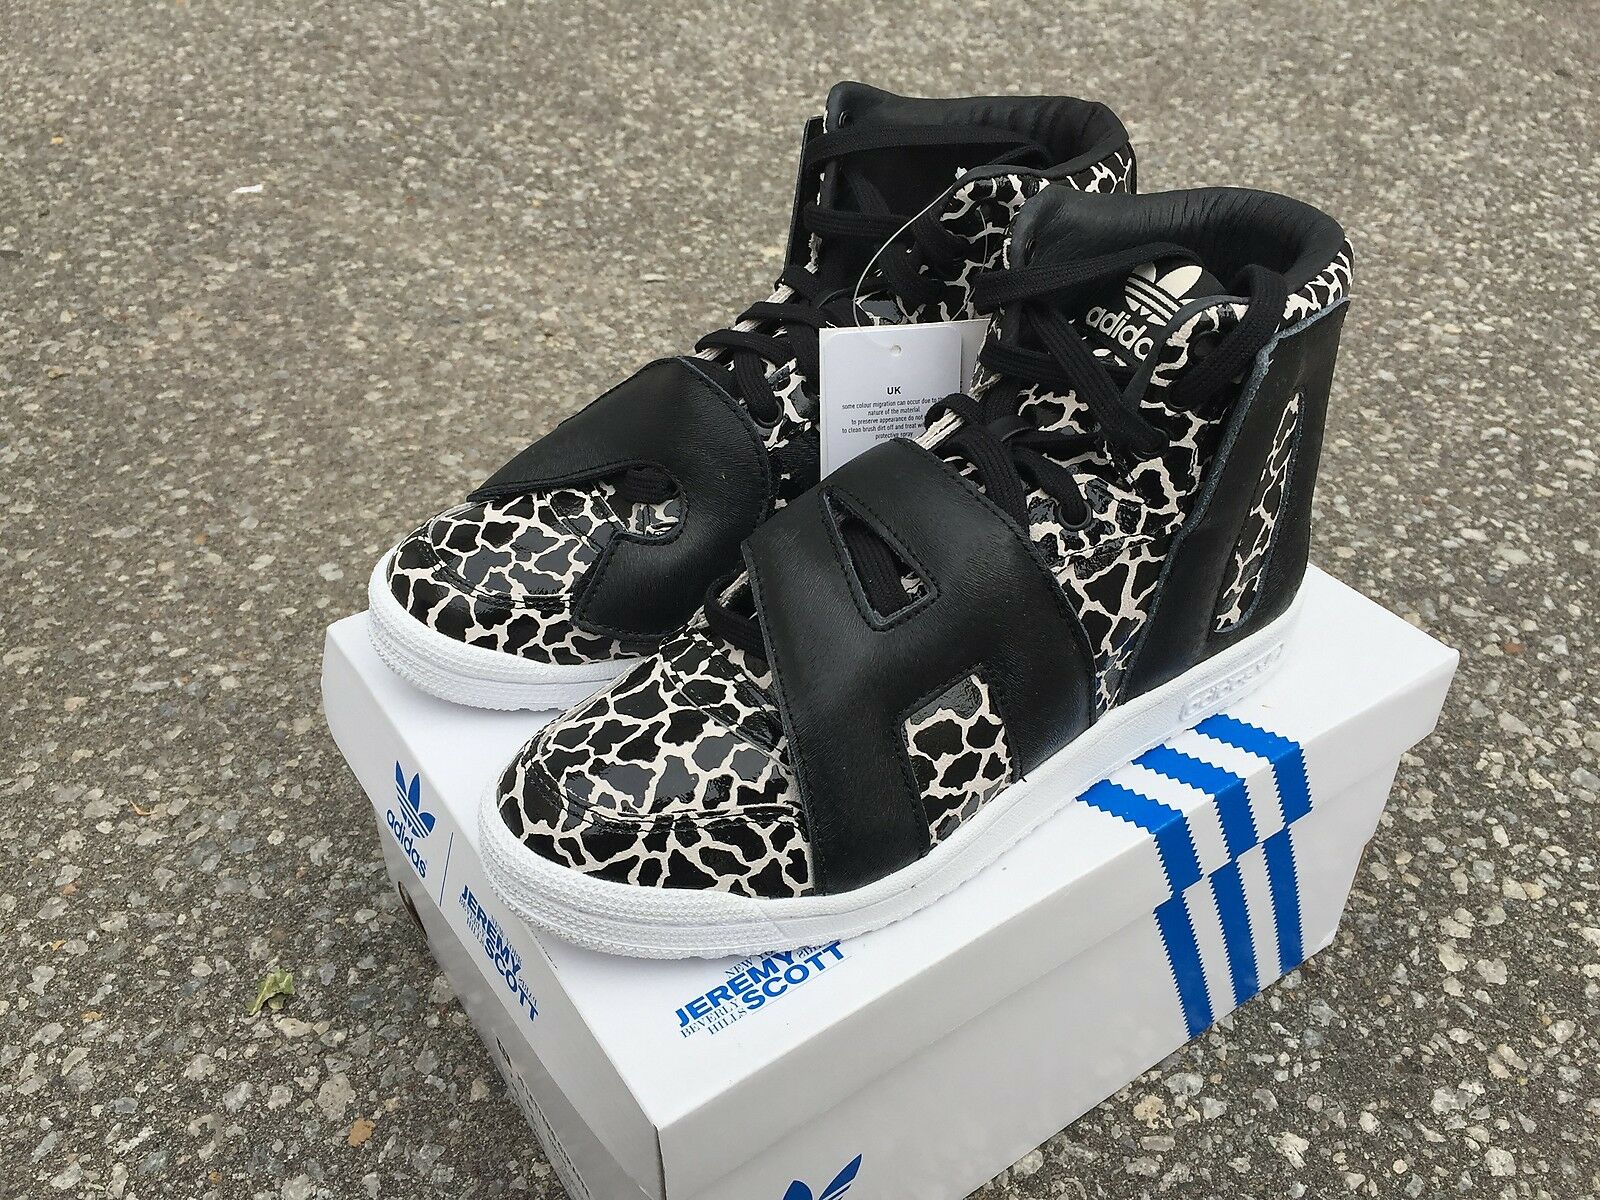 adidas giraffe shoes